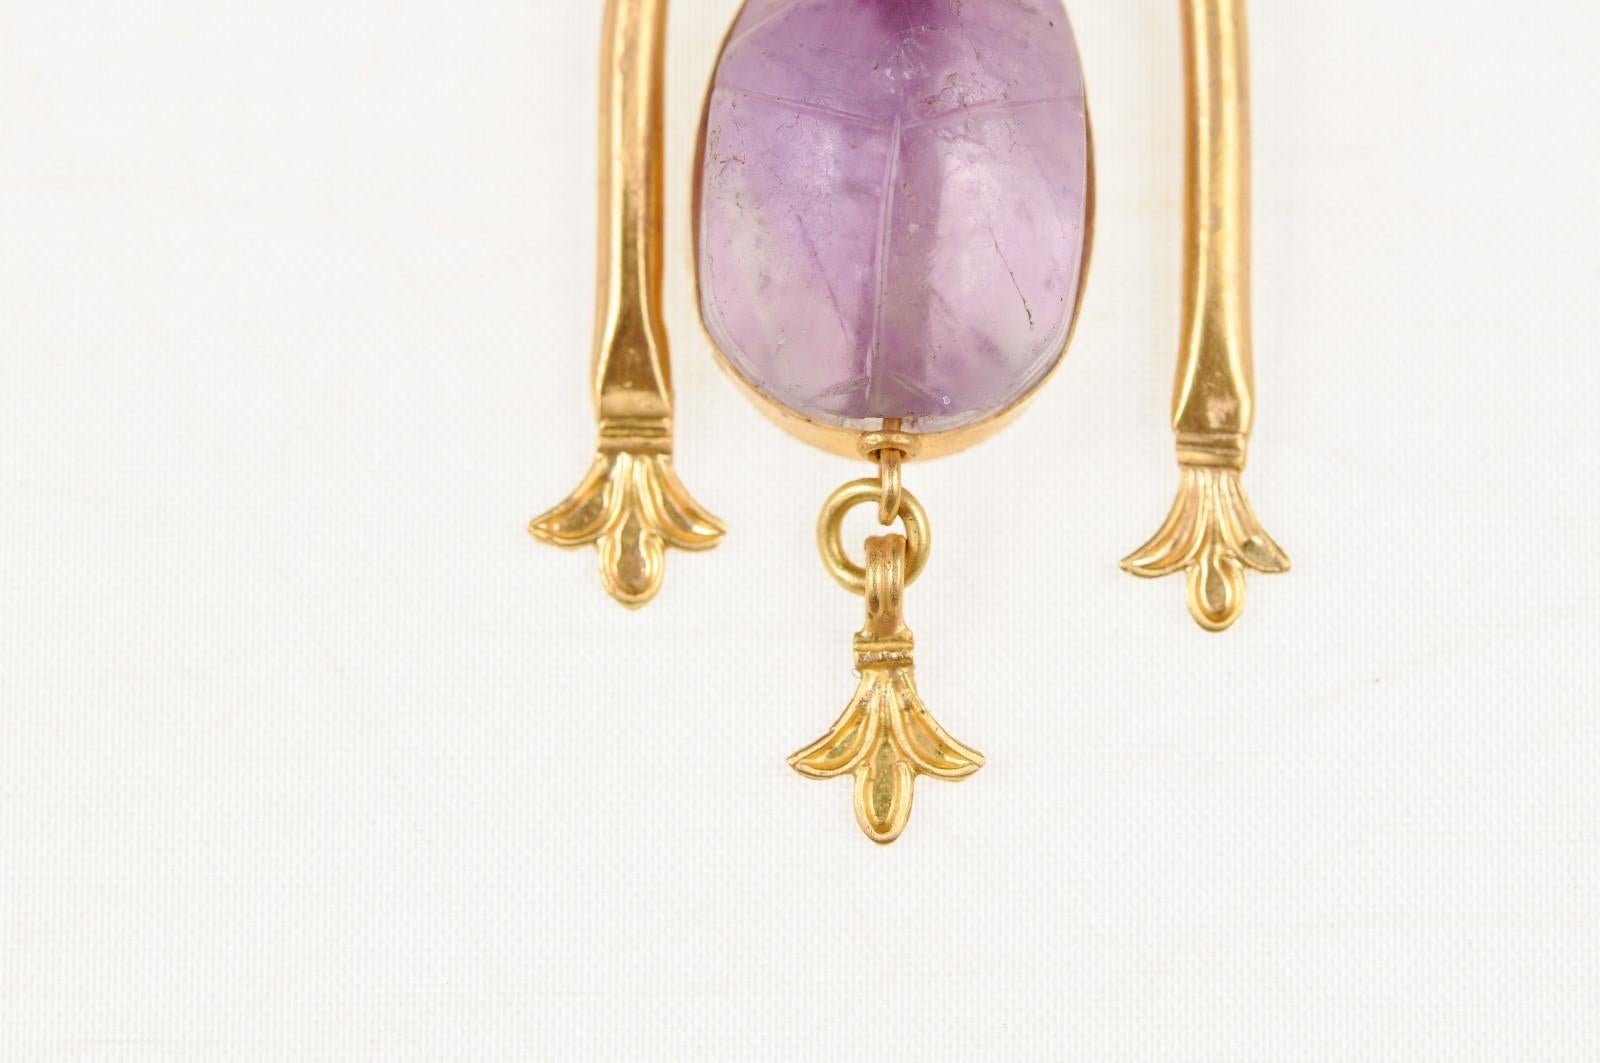 Roman Egypt Scarab & 21k Gold Pendant (pendant only) For Sale 2